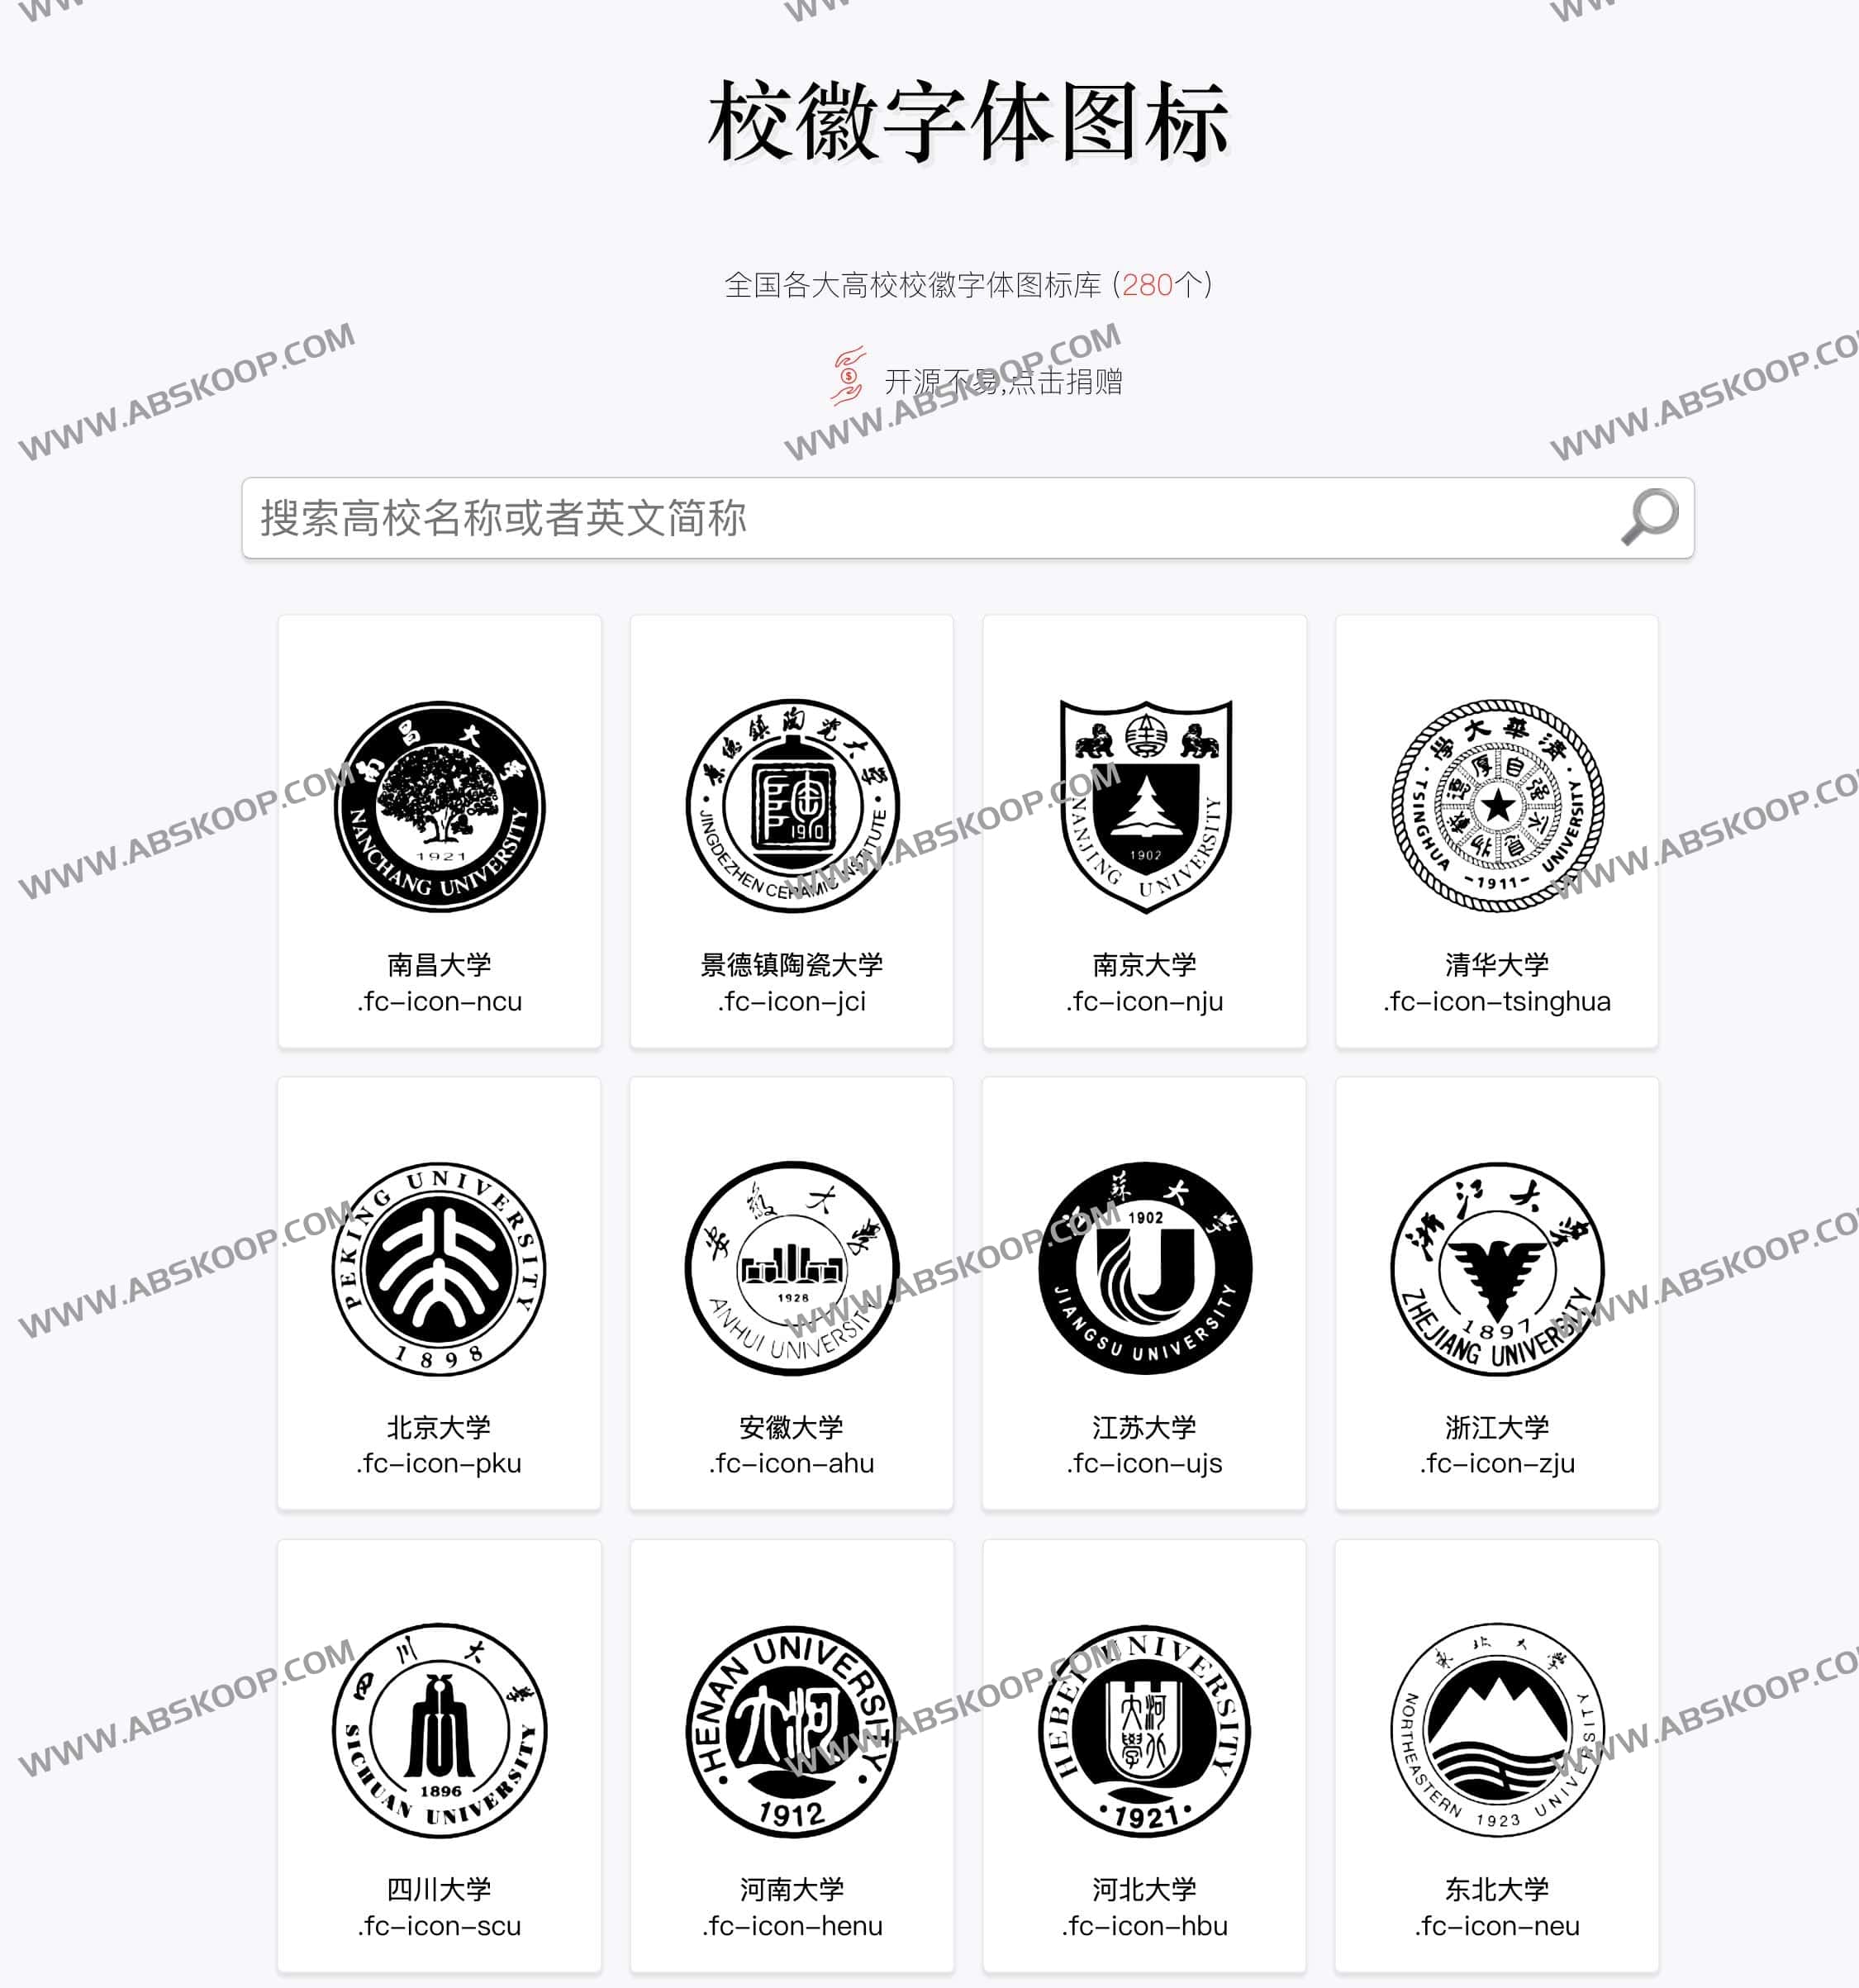 全国高校校徽字体图标库-China School Badge